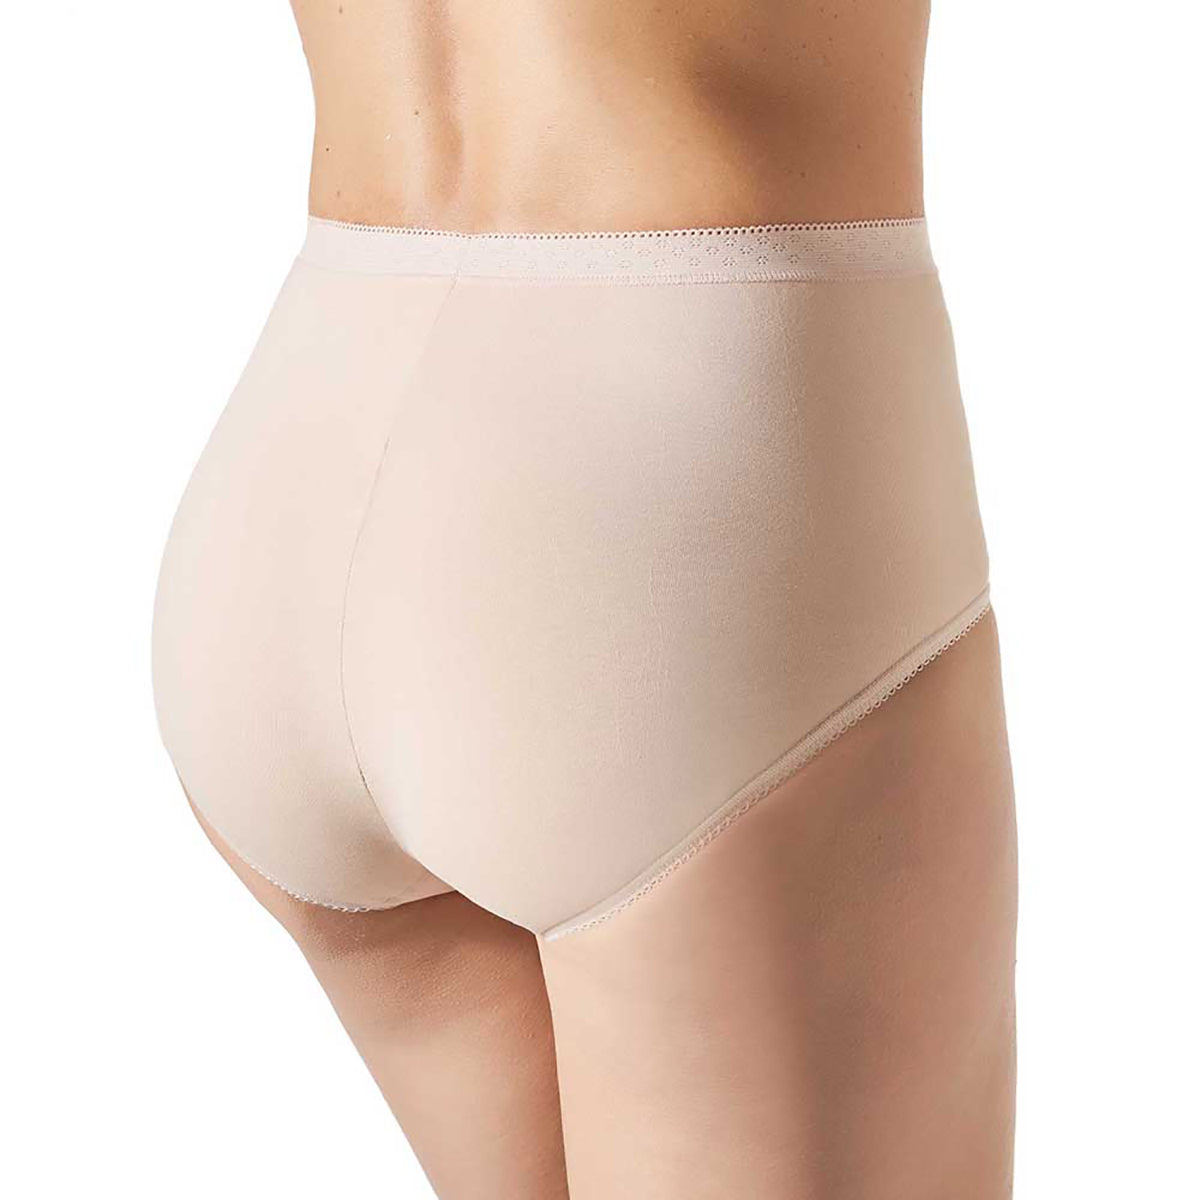 Buy Carole Hochman Ladies' 5-Pack Hipster Panty online